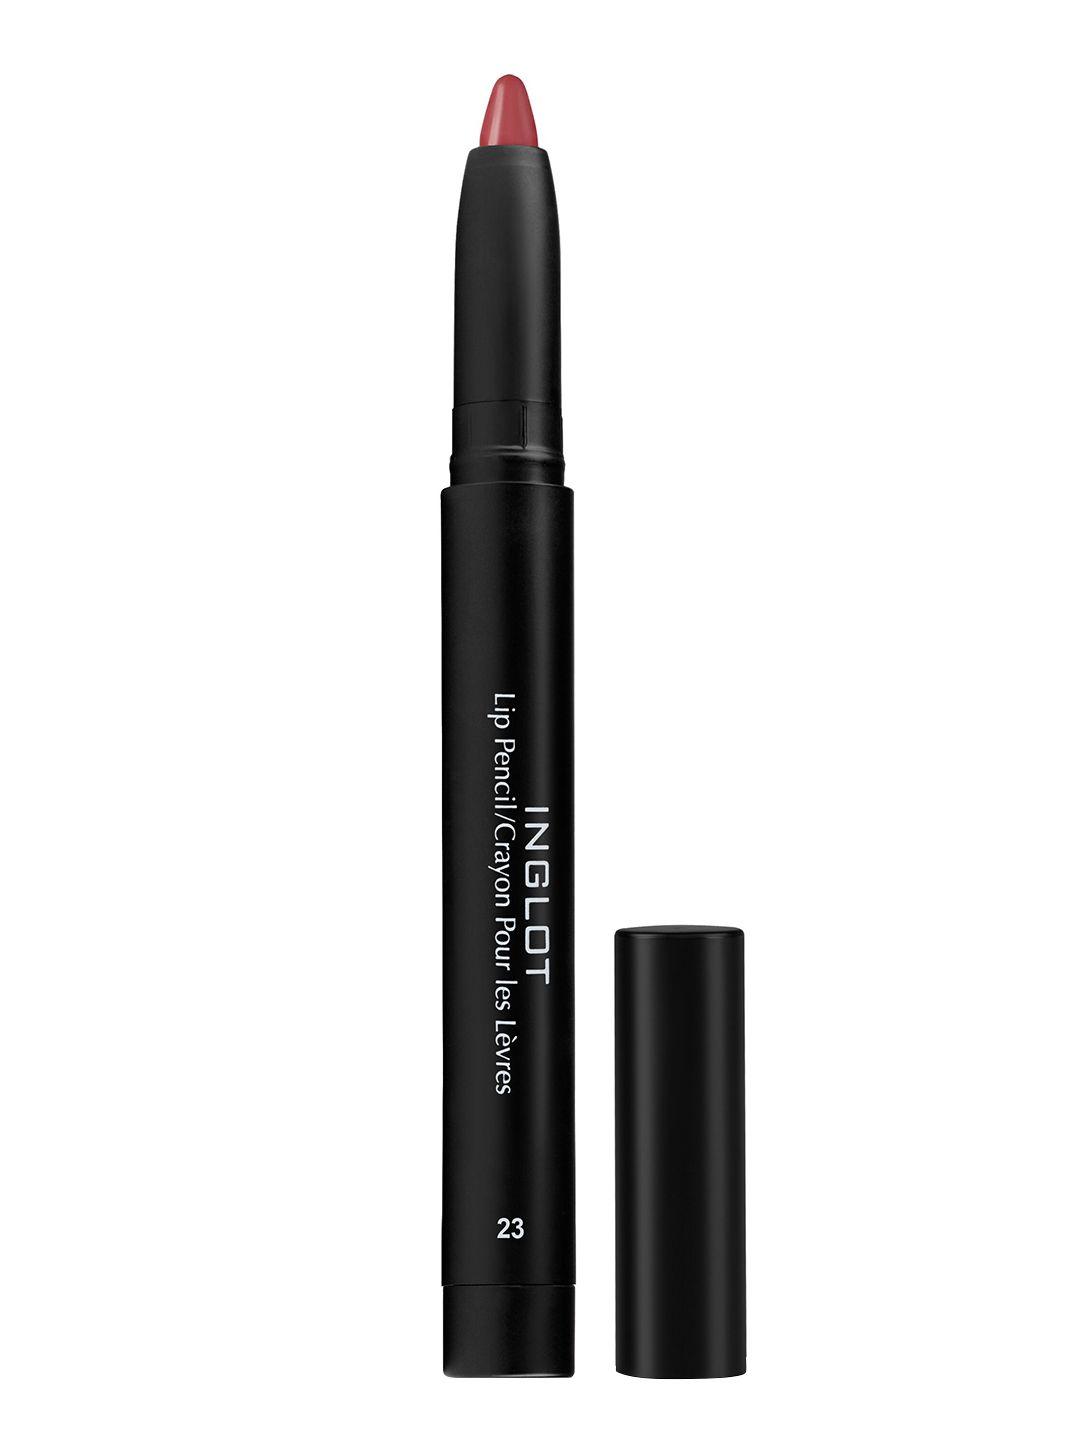 inglot amc matte lip pencil with sharpener 1.8g - shade 23